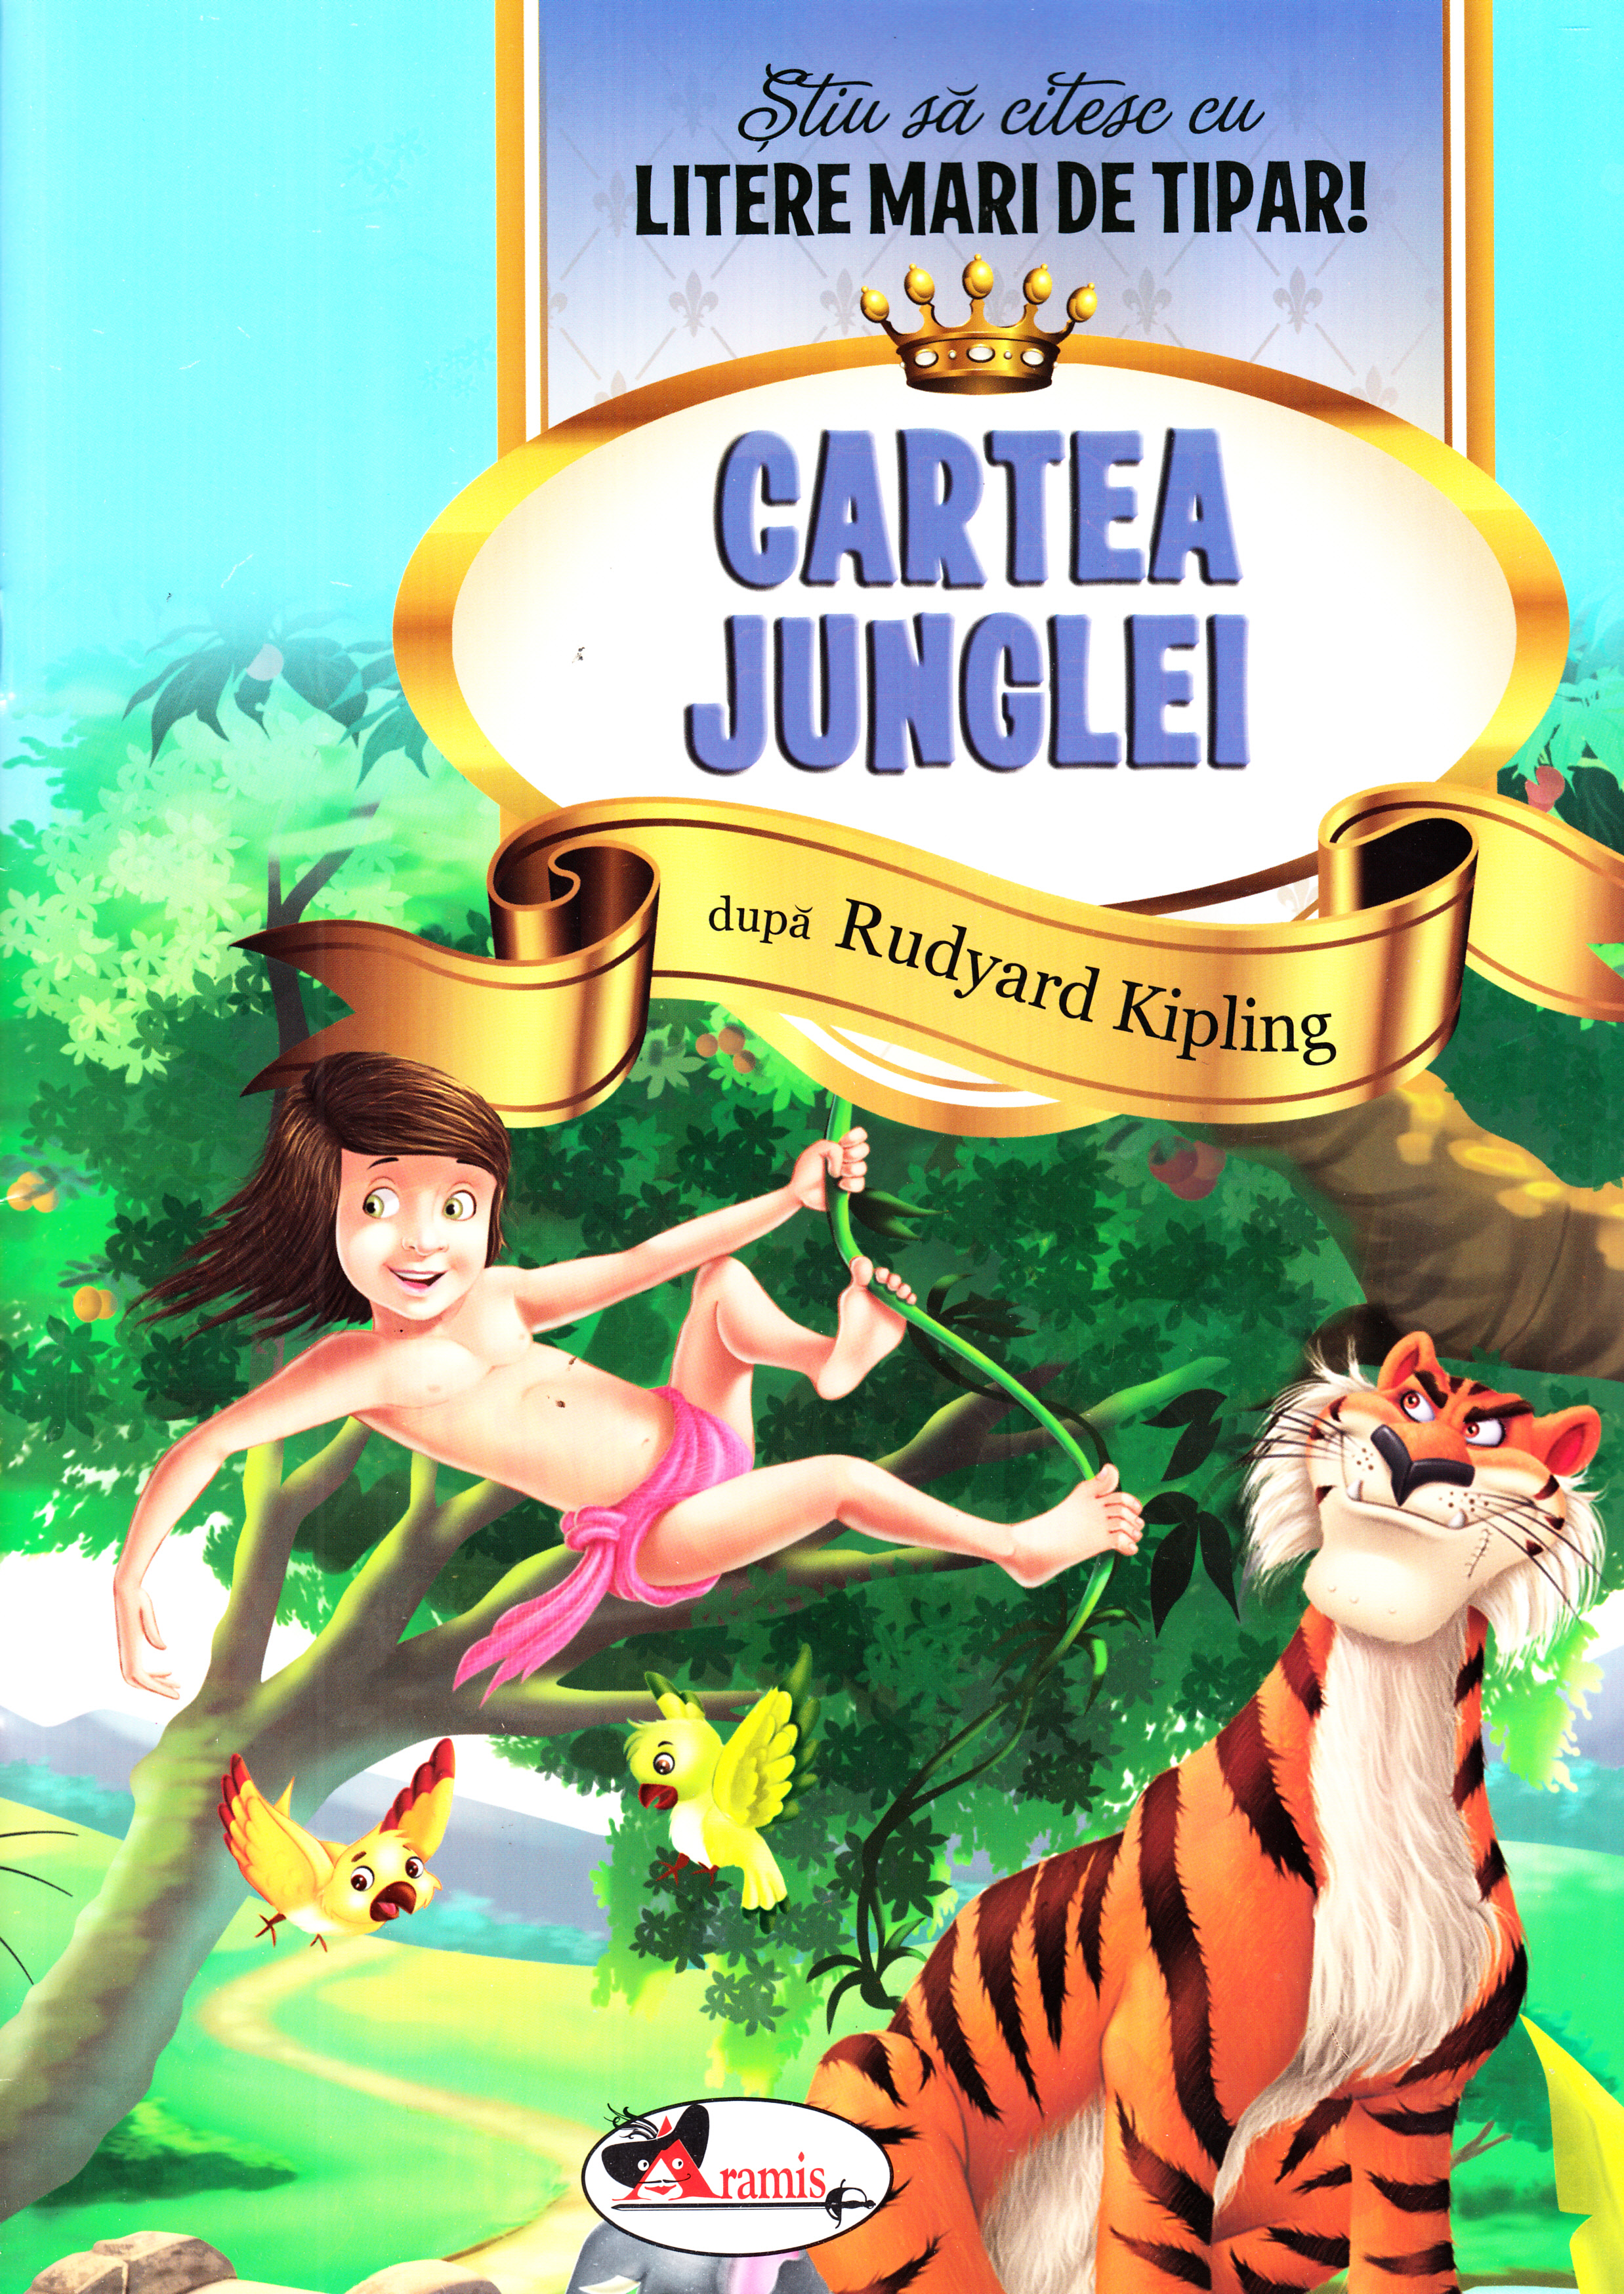 Cartea Junglei - Stiu sa citesc cu litere mari de tipar